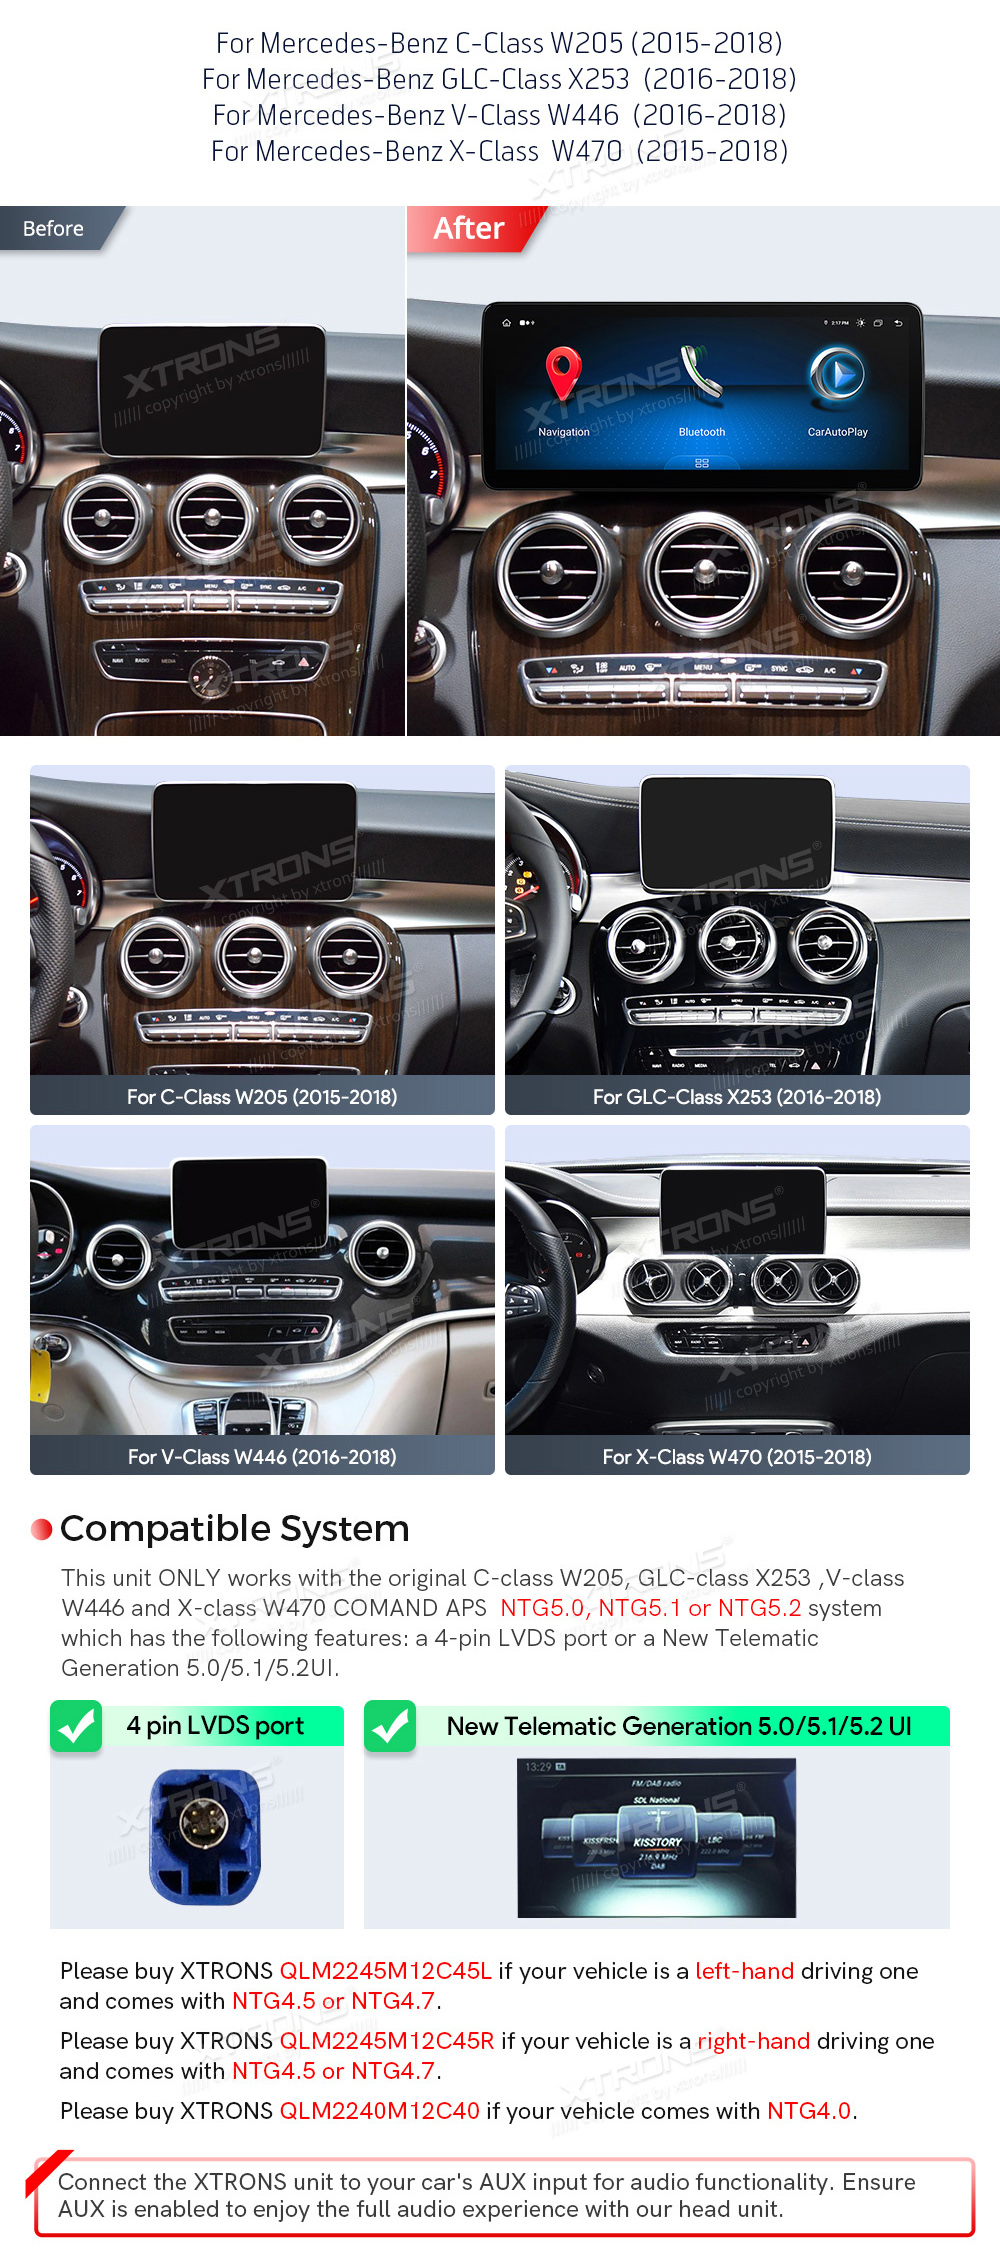 Mercedes-Benz V-Class (2015-2018) | C-Class | GLC | NTG5.0 | NTG5.2  XTRONS QLM2250M12C5 merkkikohtainen Android GPS multimedia näyttö